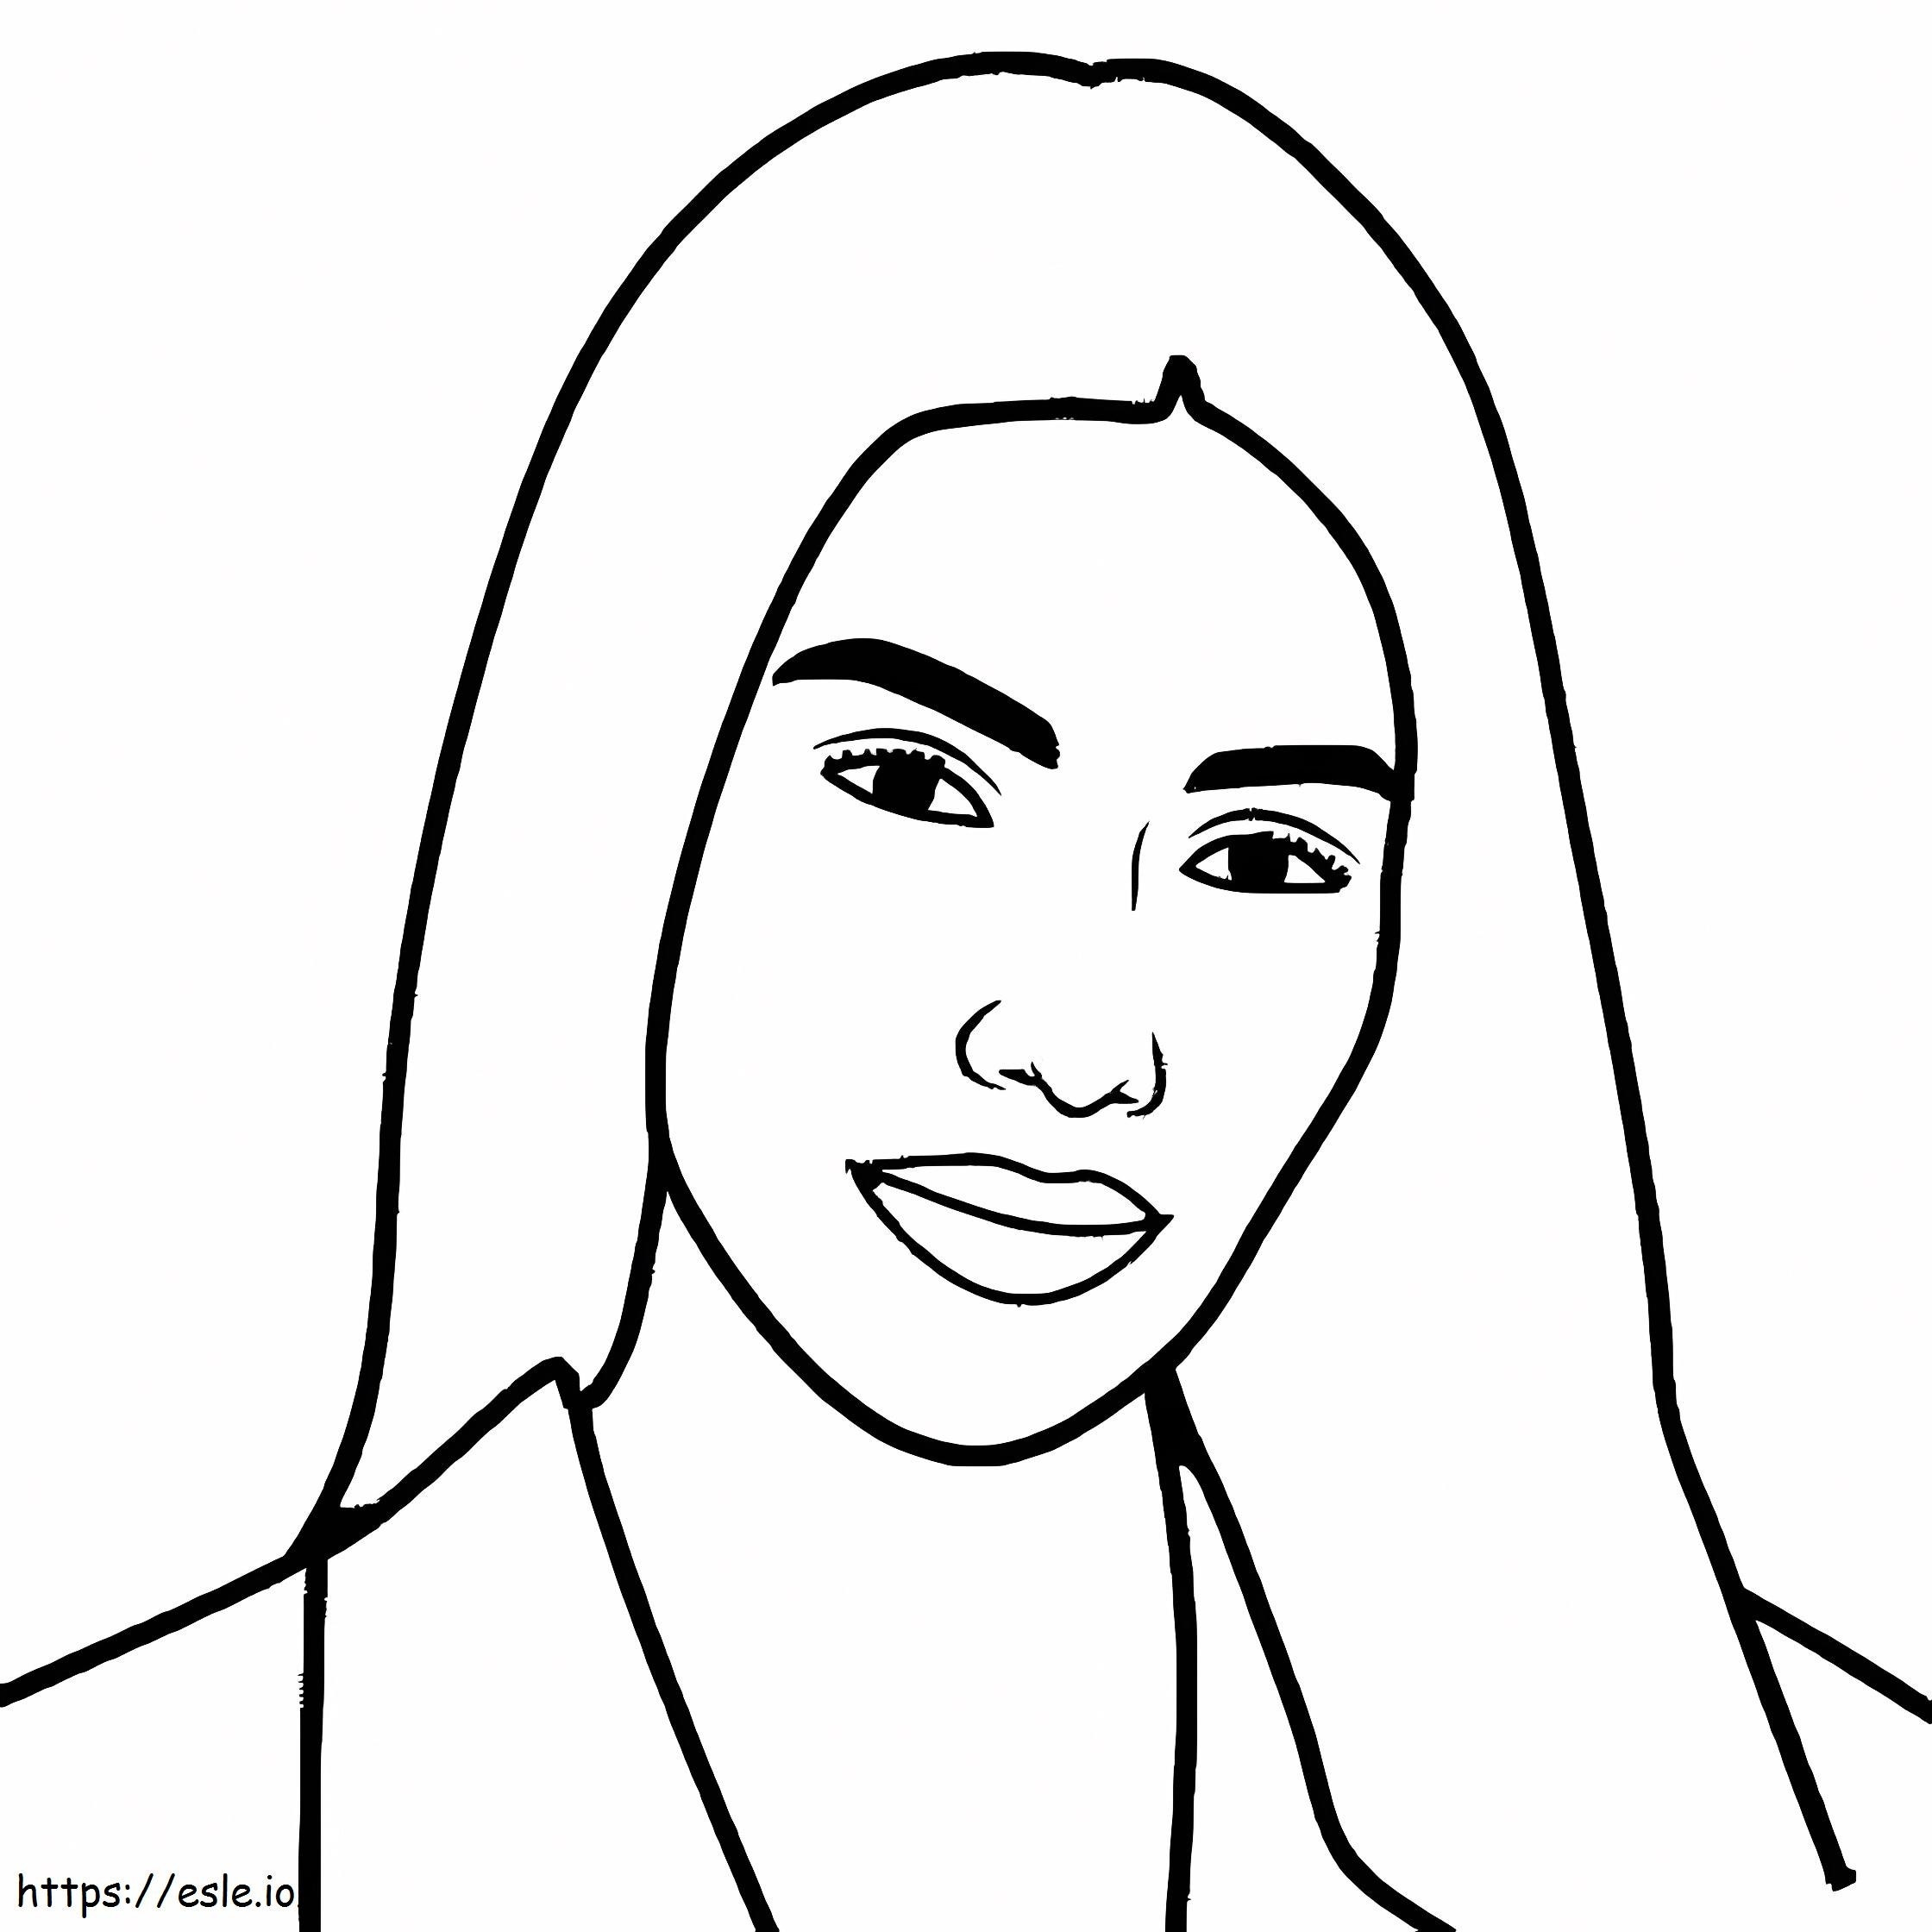 Kim Kardashian Divertida coloring page